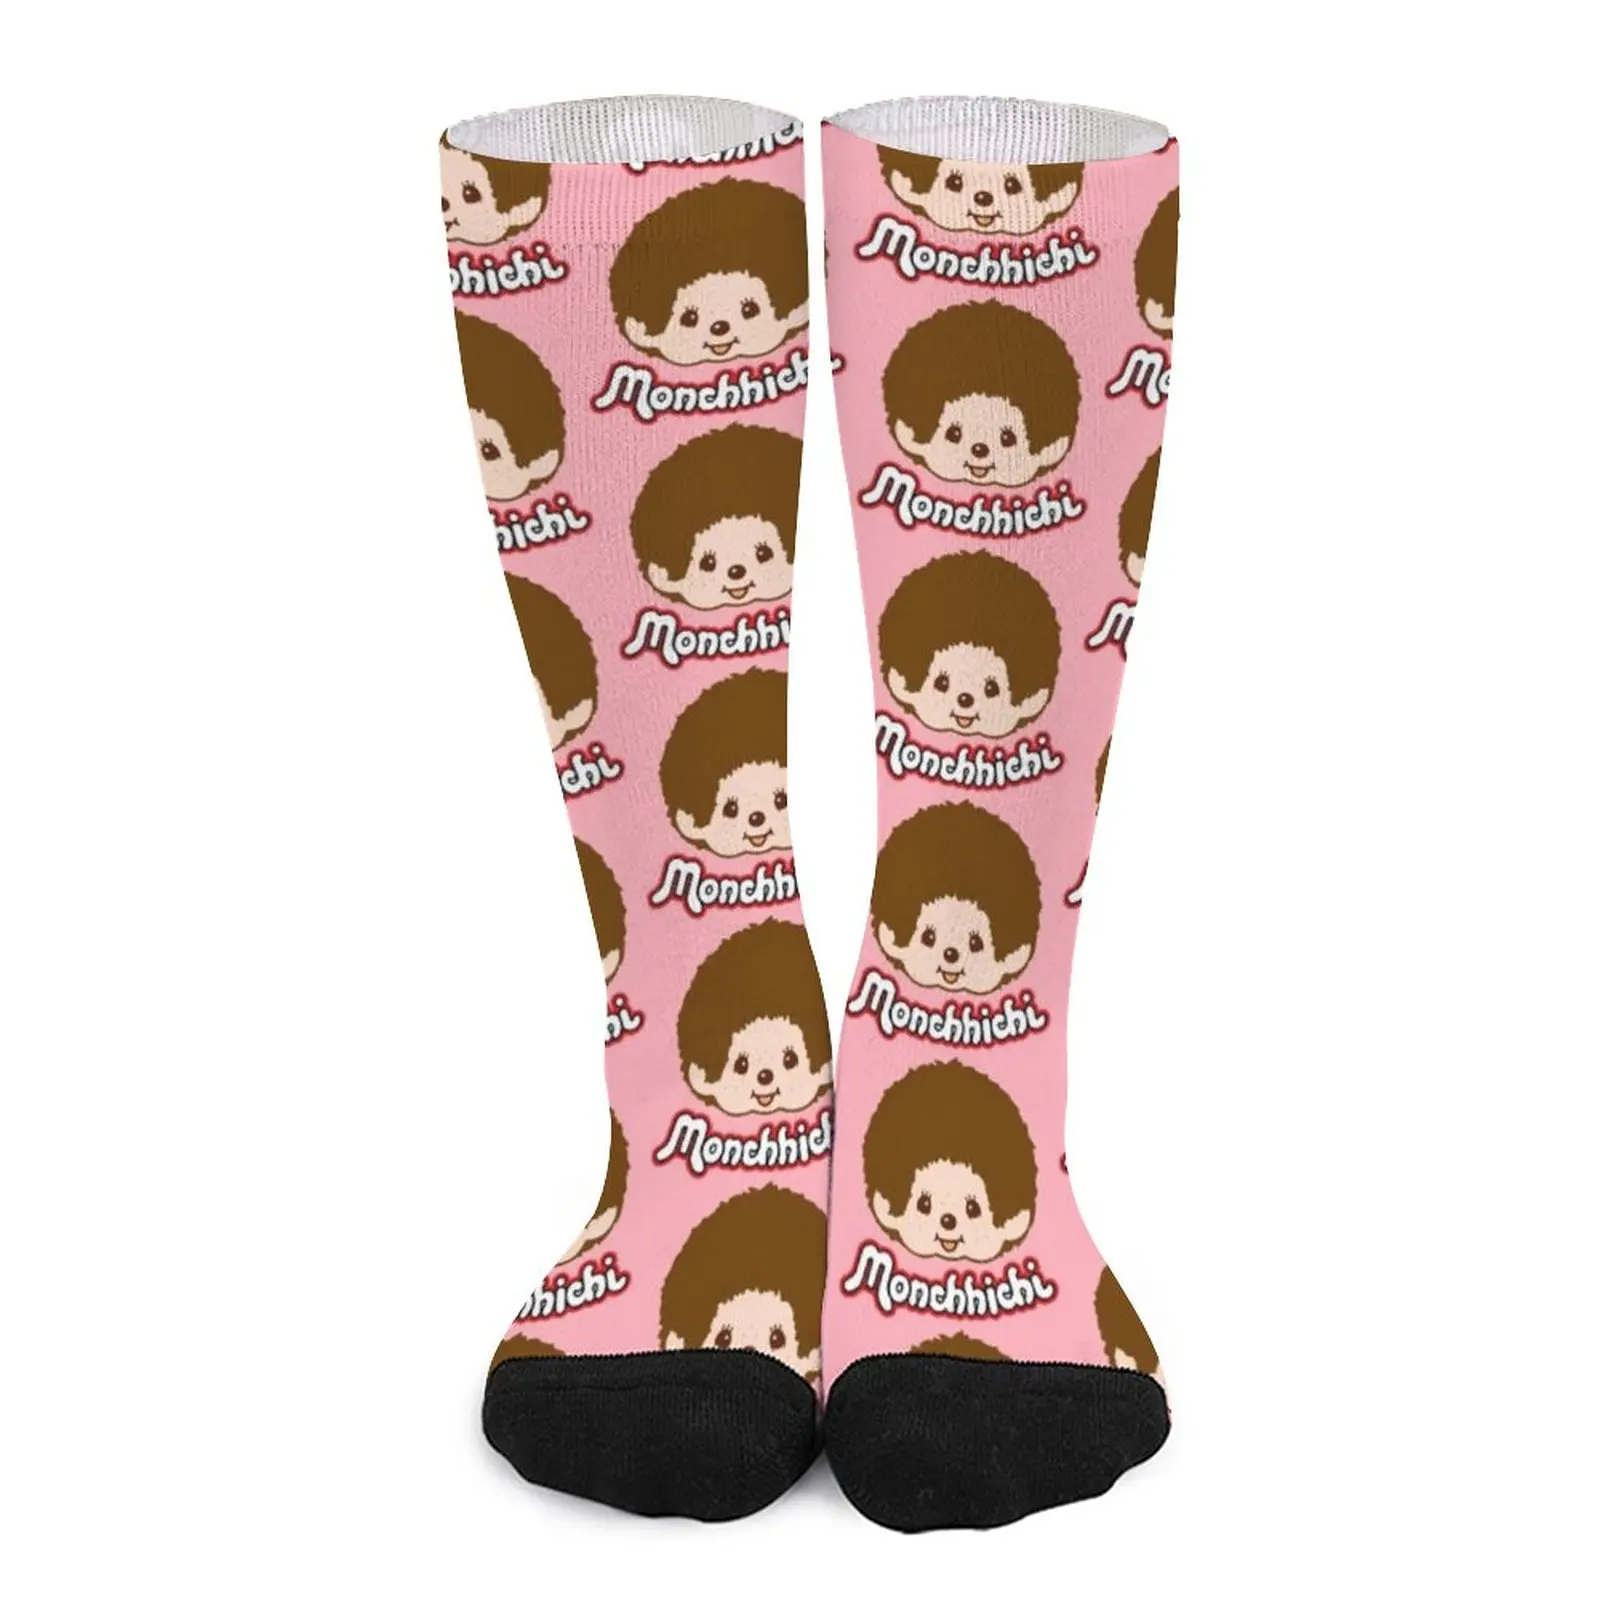 Monchichi - Pink Socks mens tennis gifts for men